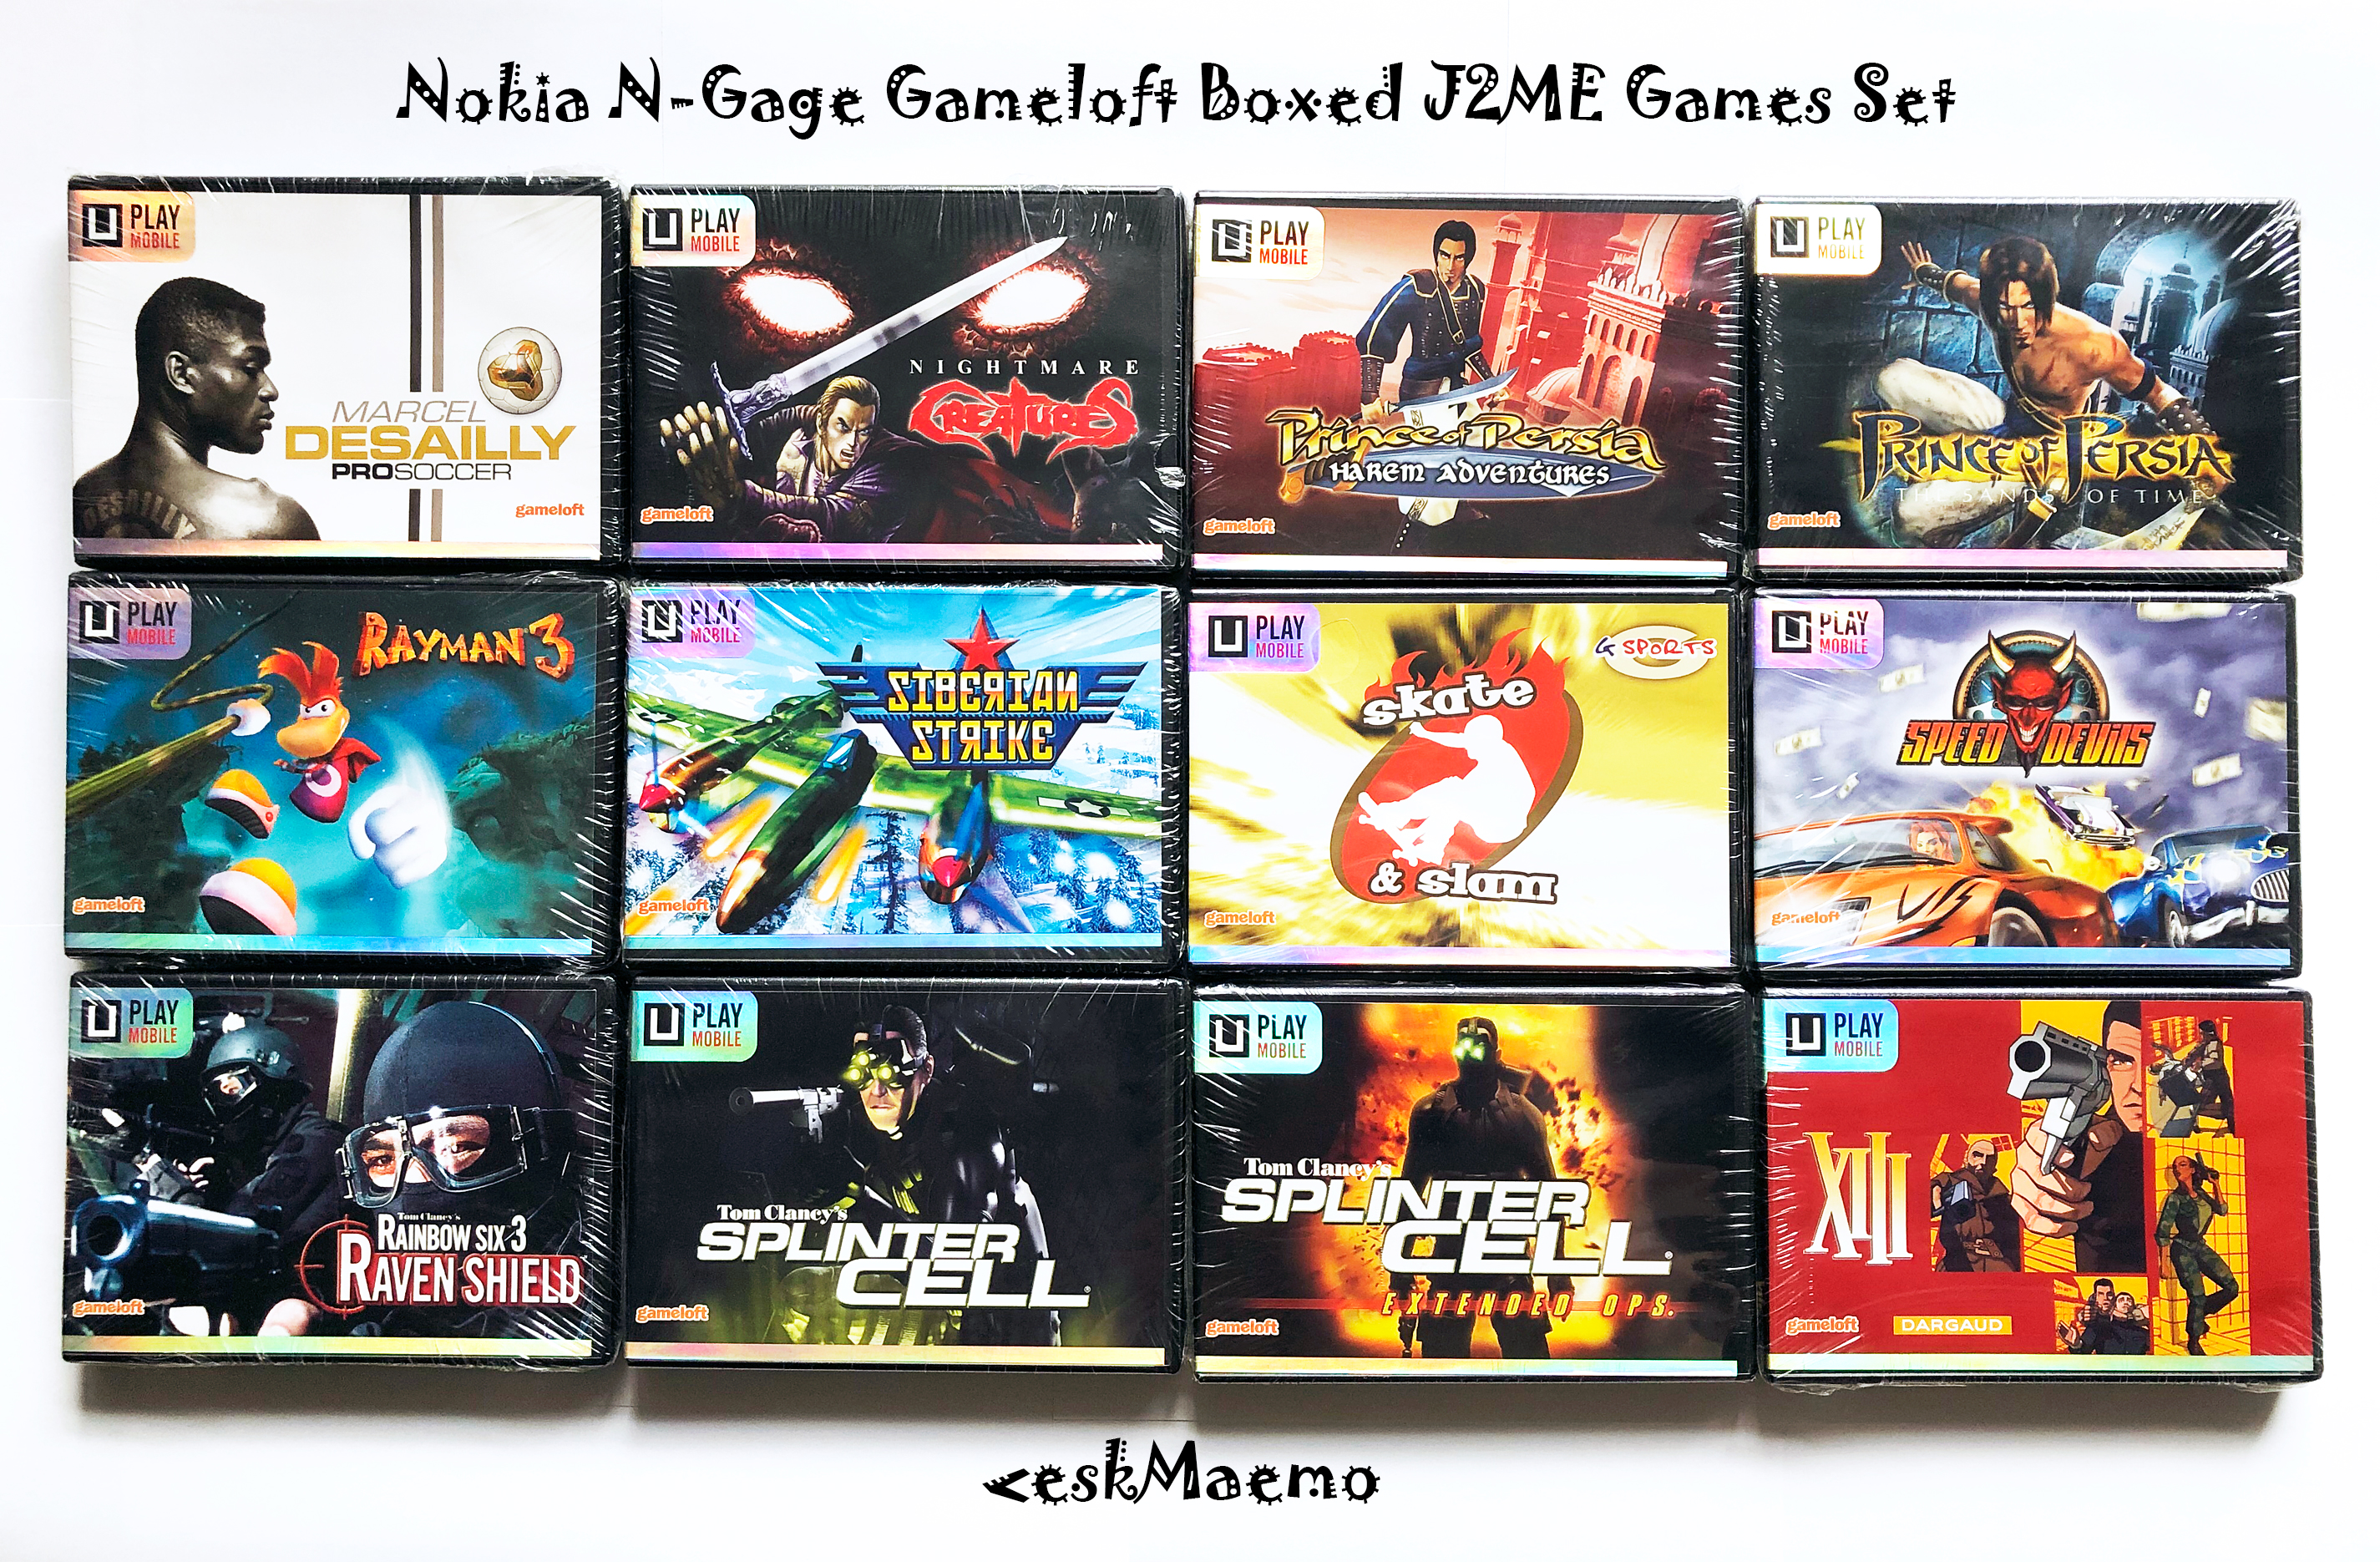 Nokia_N-Gage_Gameloft_Boxed_J2ME_Games_Set_Front-eskMaemo.jpg